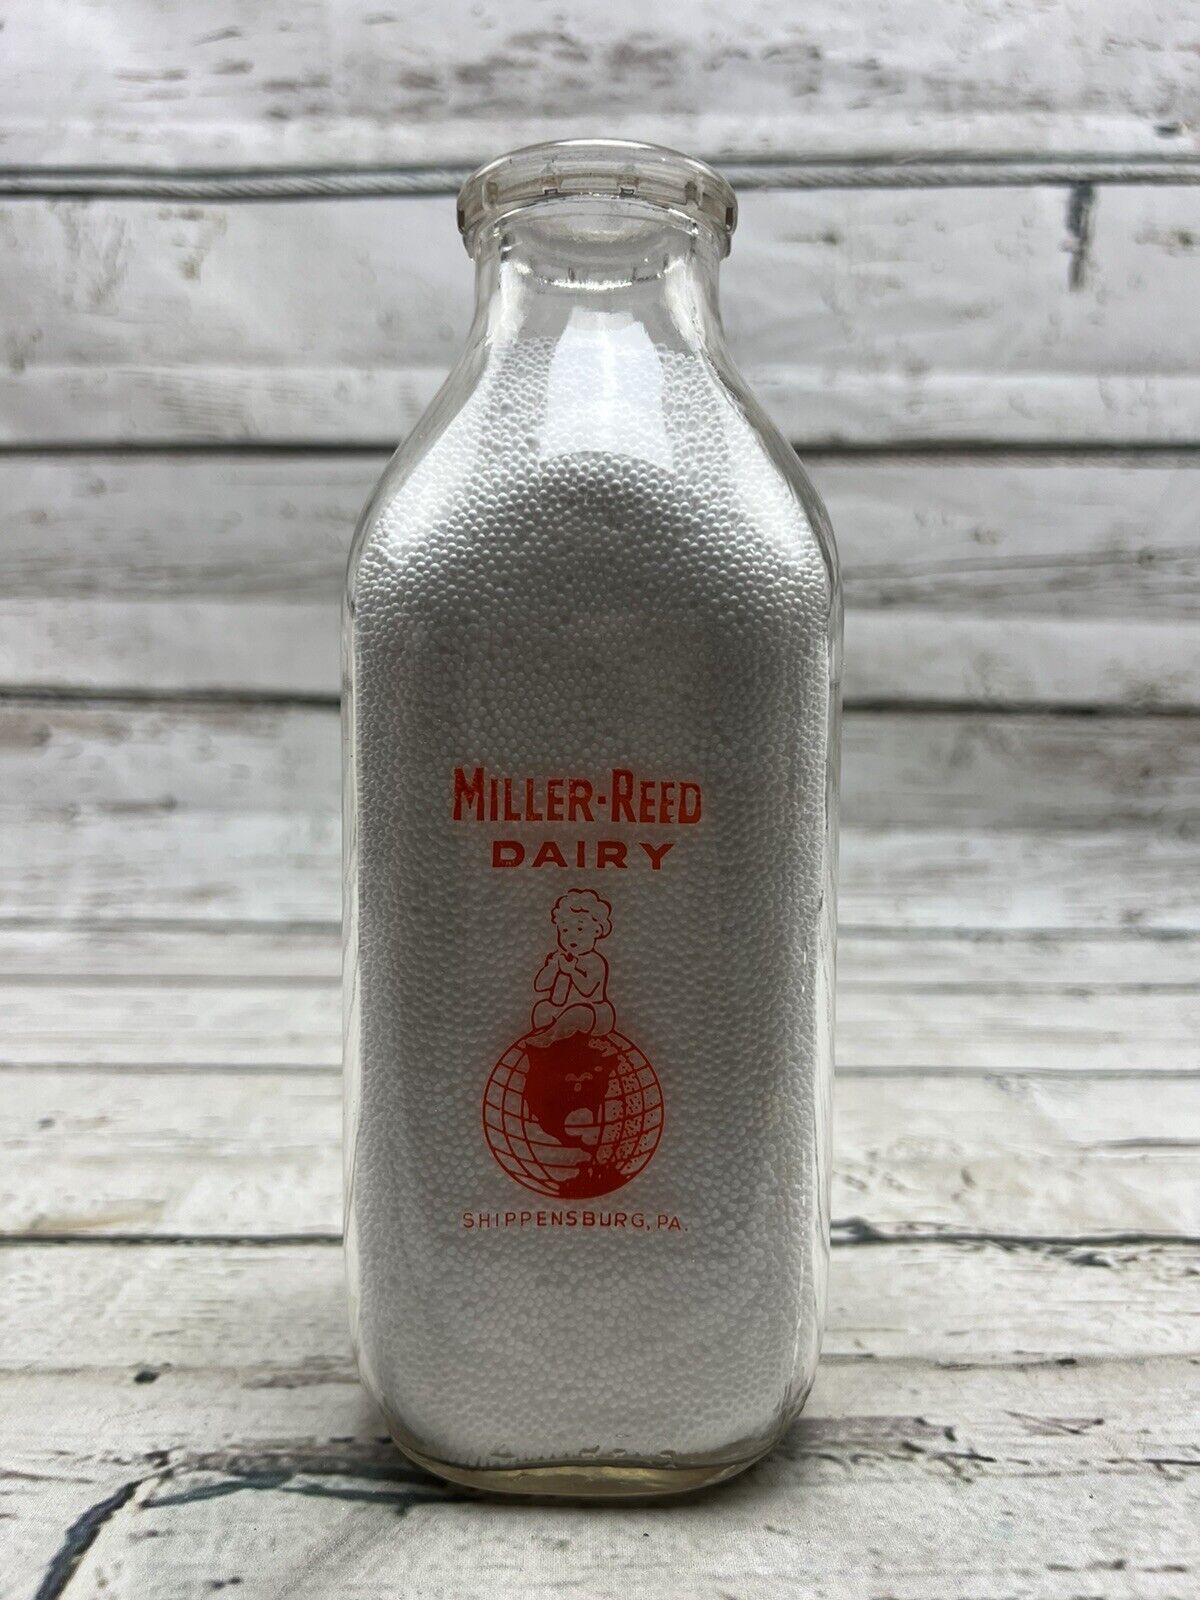 VTG Miller-Reed Dairy Shippensburg PA Double Sided Square Quart Milk Bottle